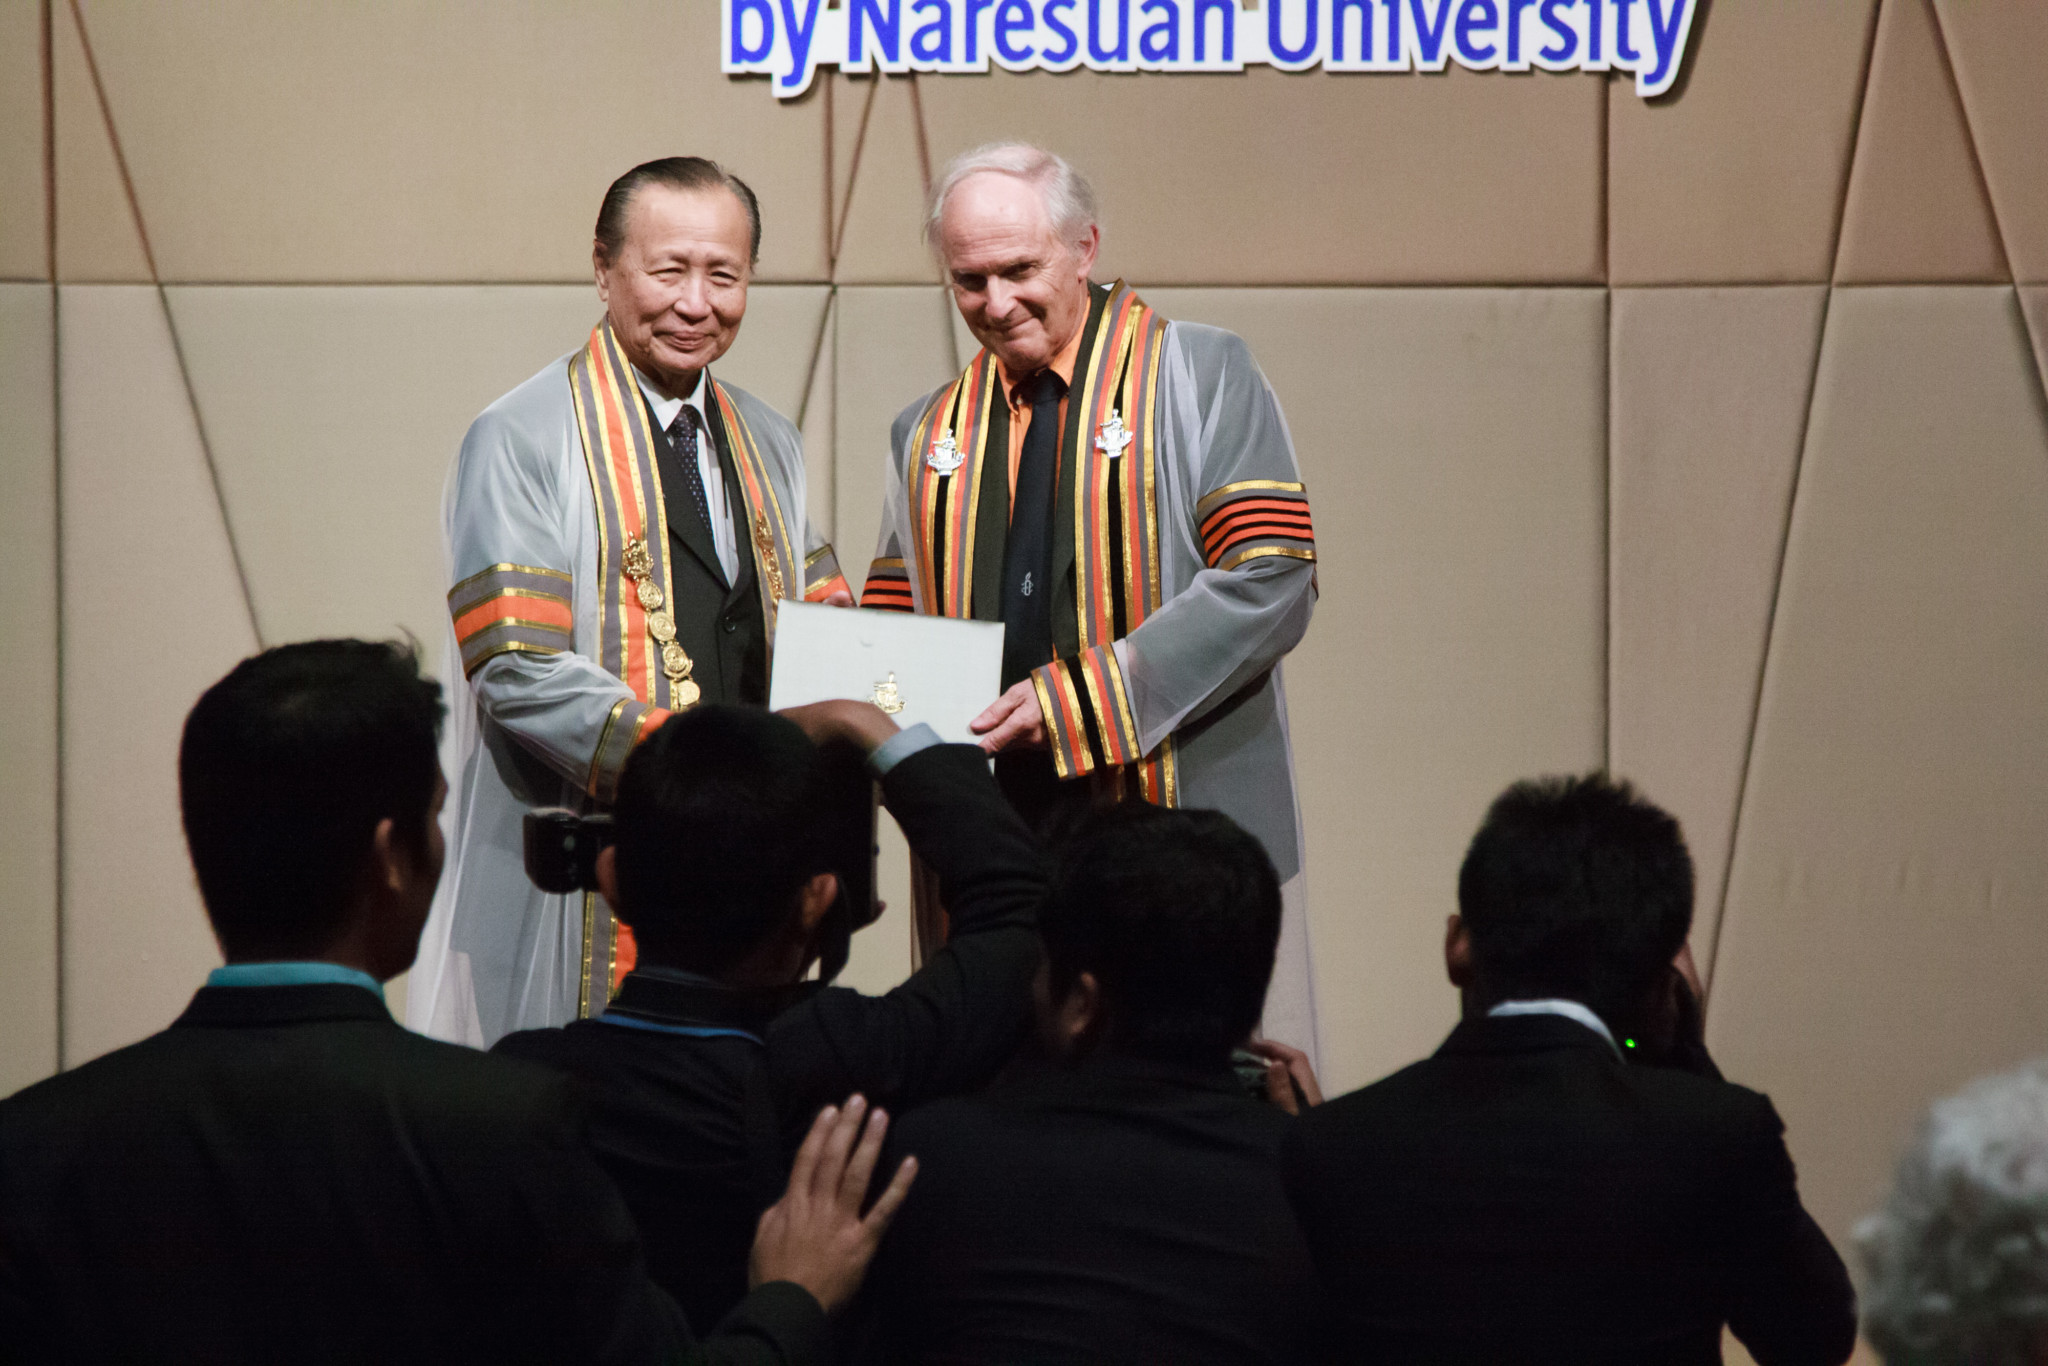 Chemistry Nobel Laureate Prof. Sir Harold W. Kroto being conferred an honorary doctorate degree by Naresuan University in Bangkok